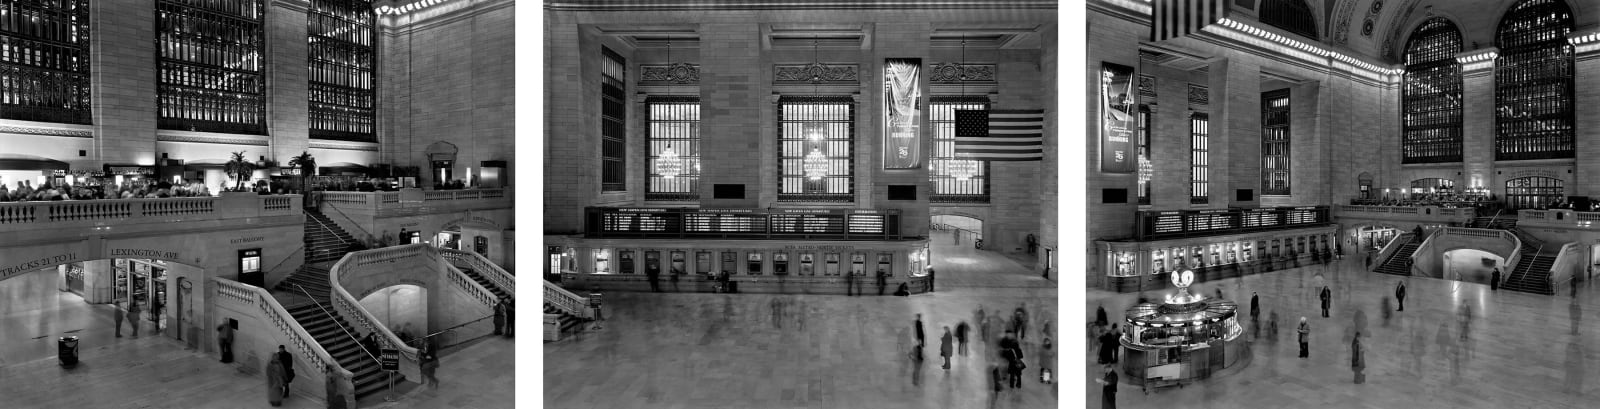 Matthew Pillsbury, 12 minutes at Rush Hour, Grand Central Terminal, Wednesday, January 23rd, 2008, 5:58-6:10pm, 2008